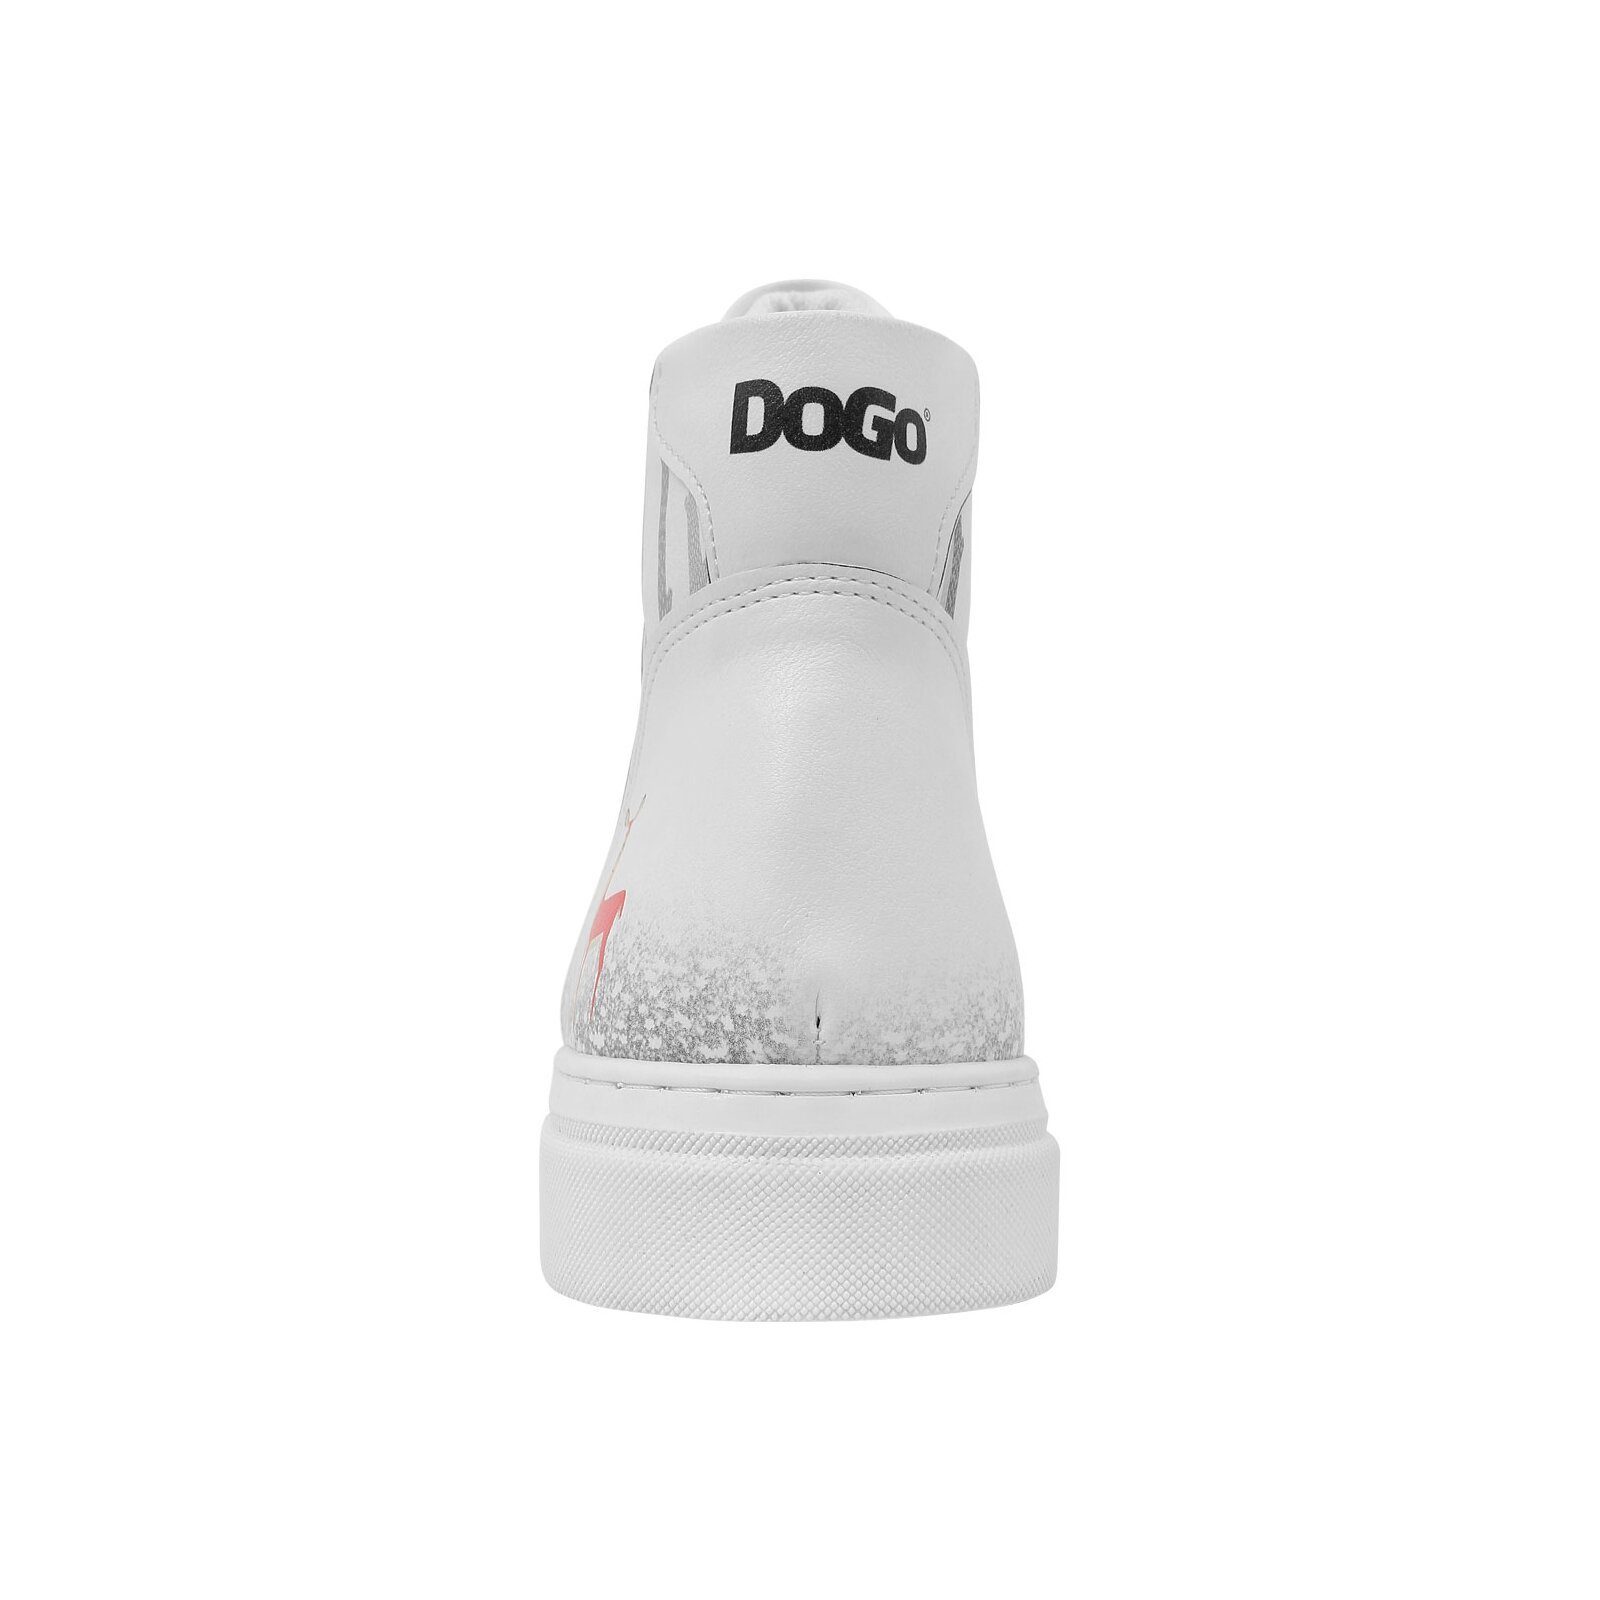 Ace Schwarz Boots DOGO Vegan Stiefelette